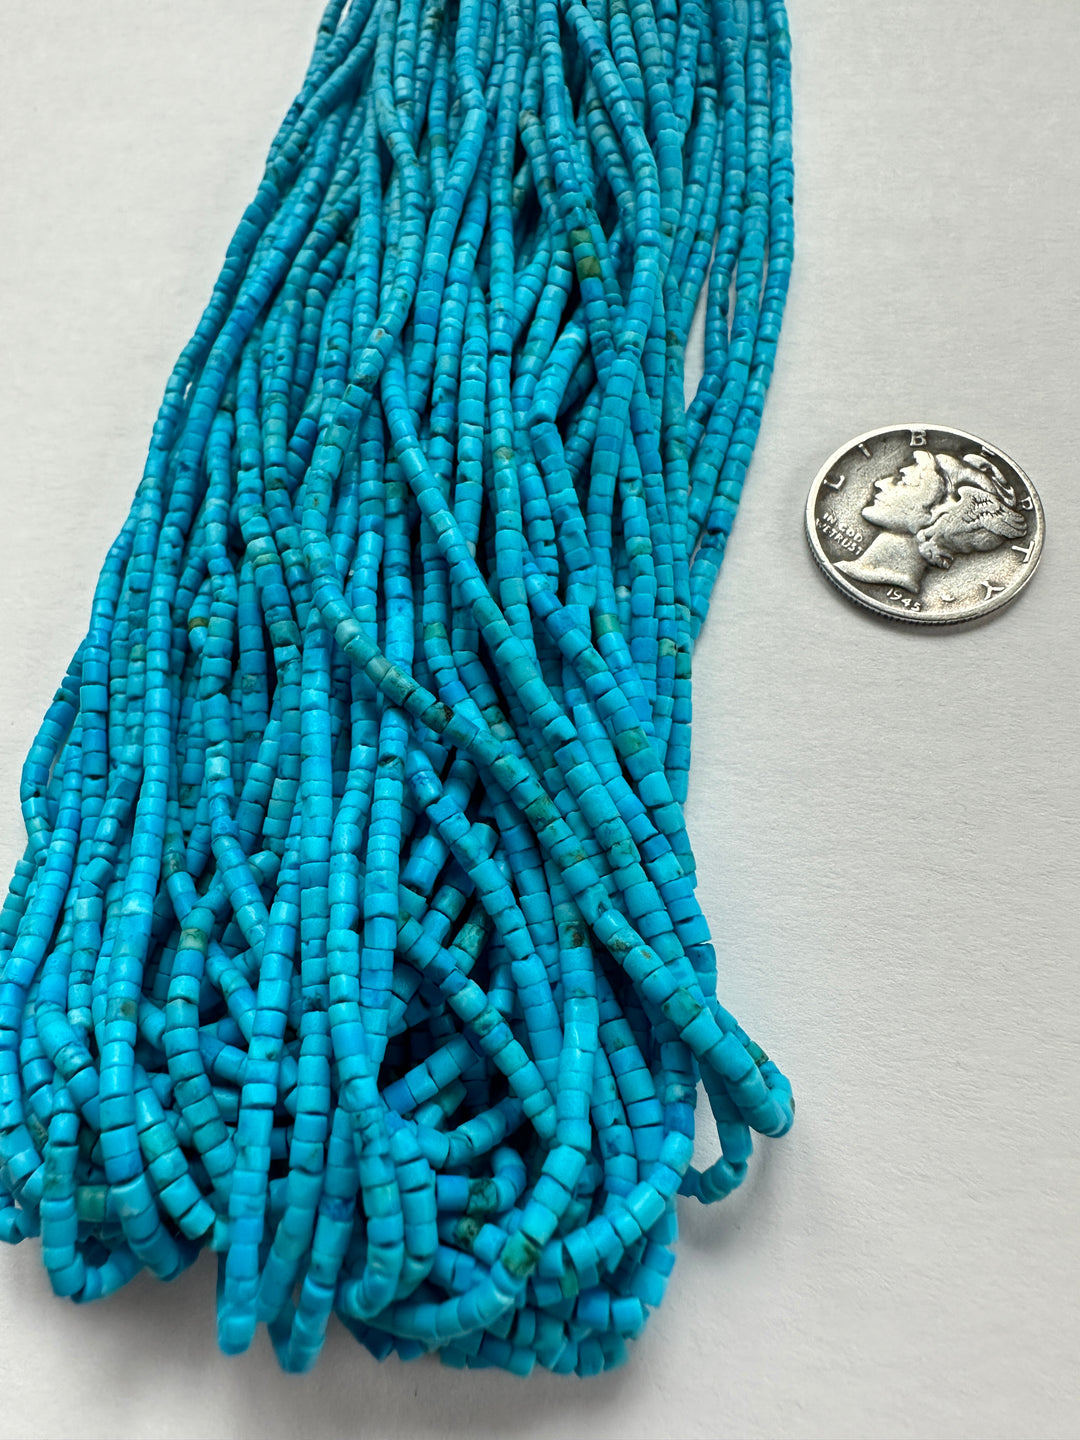 Tiny Turquoise Bead Strands